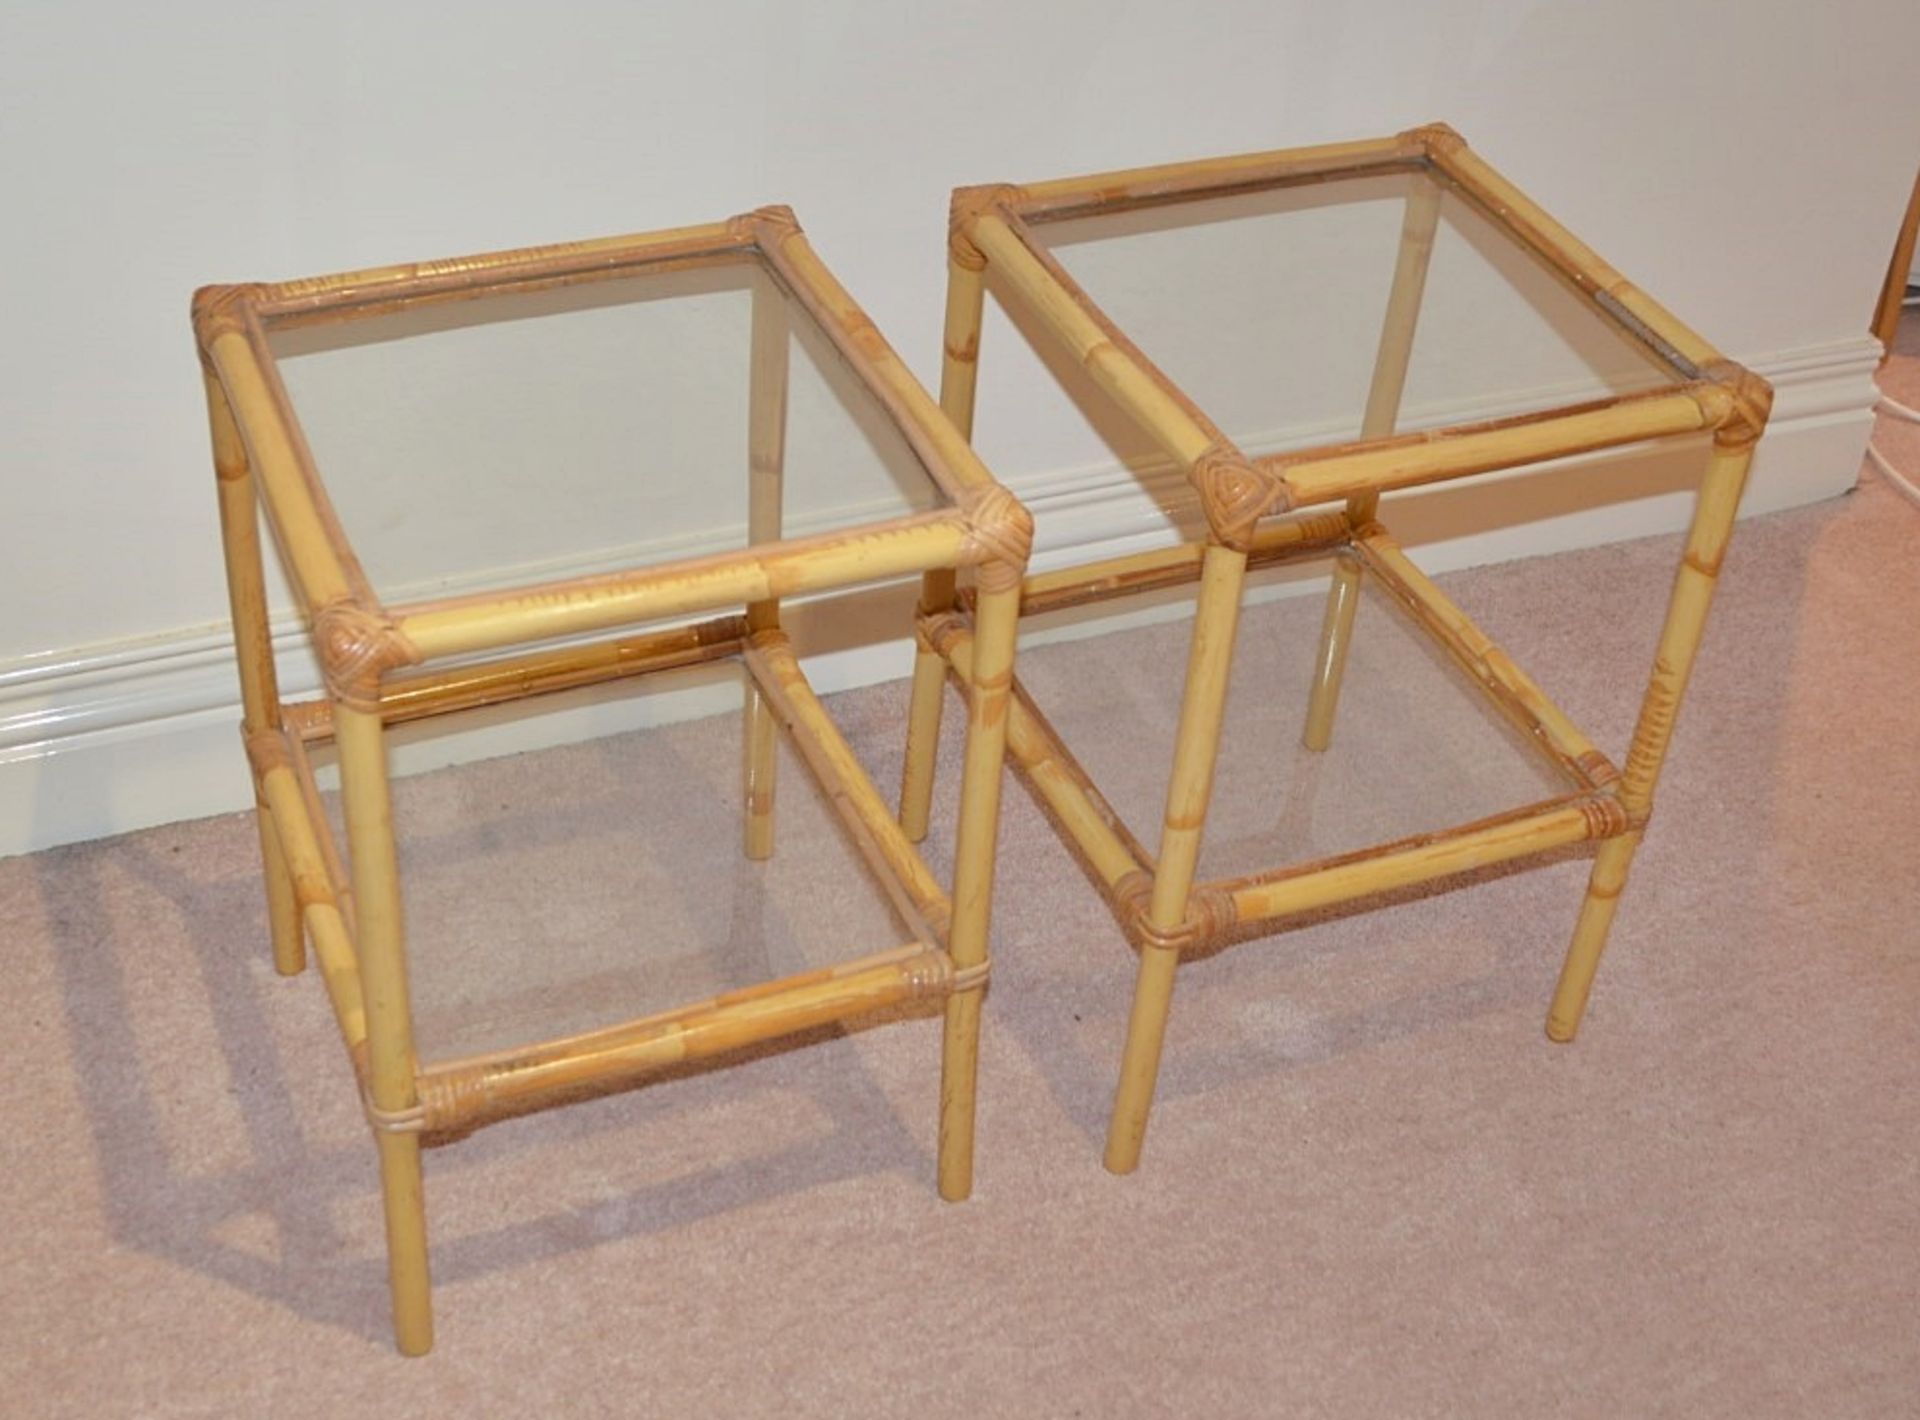 2 x Bamboo Glass Side Table - CL368 - Bowdon WA14 - NO VAT